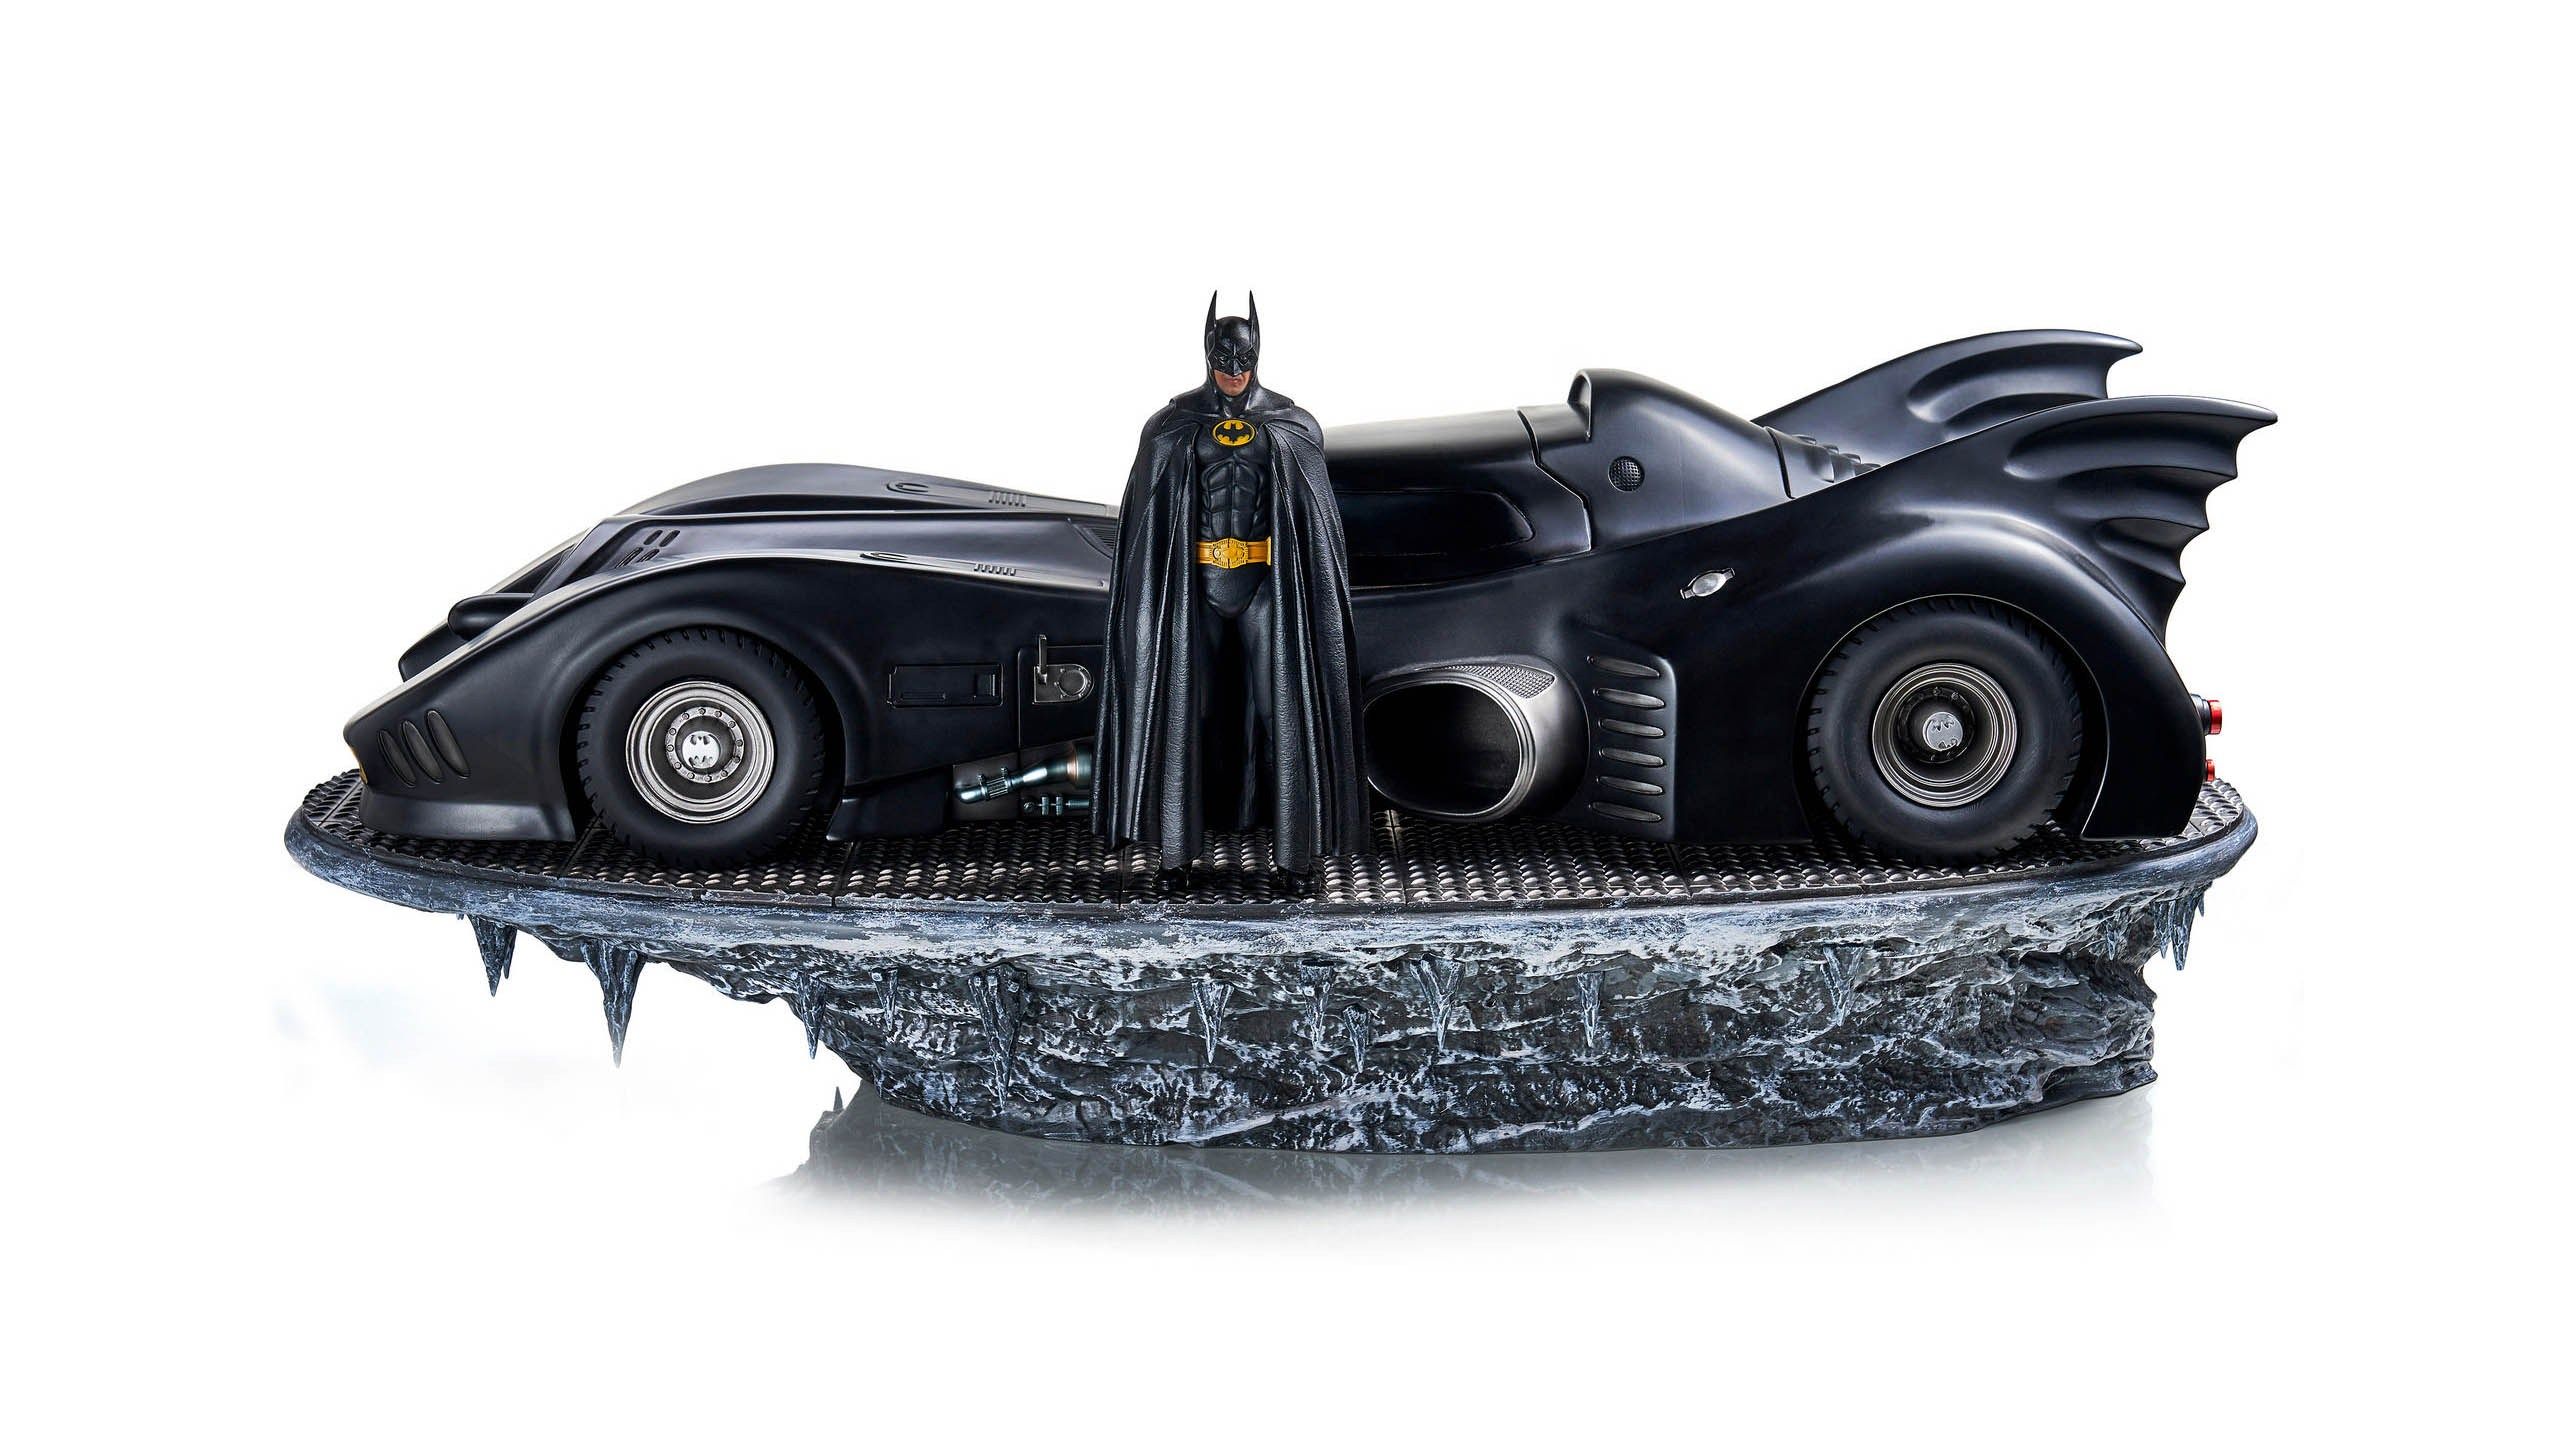 Iron Studios 89 Batmobile statue will be your new centerpiece